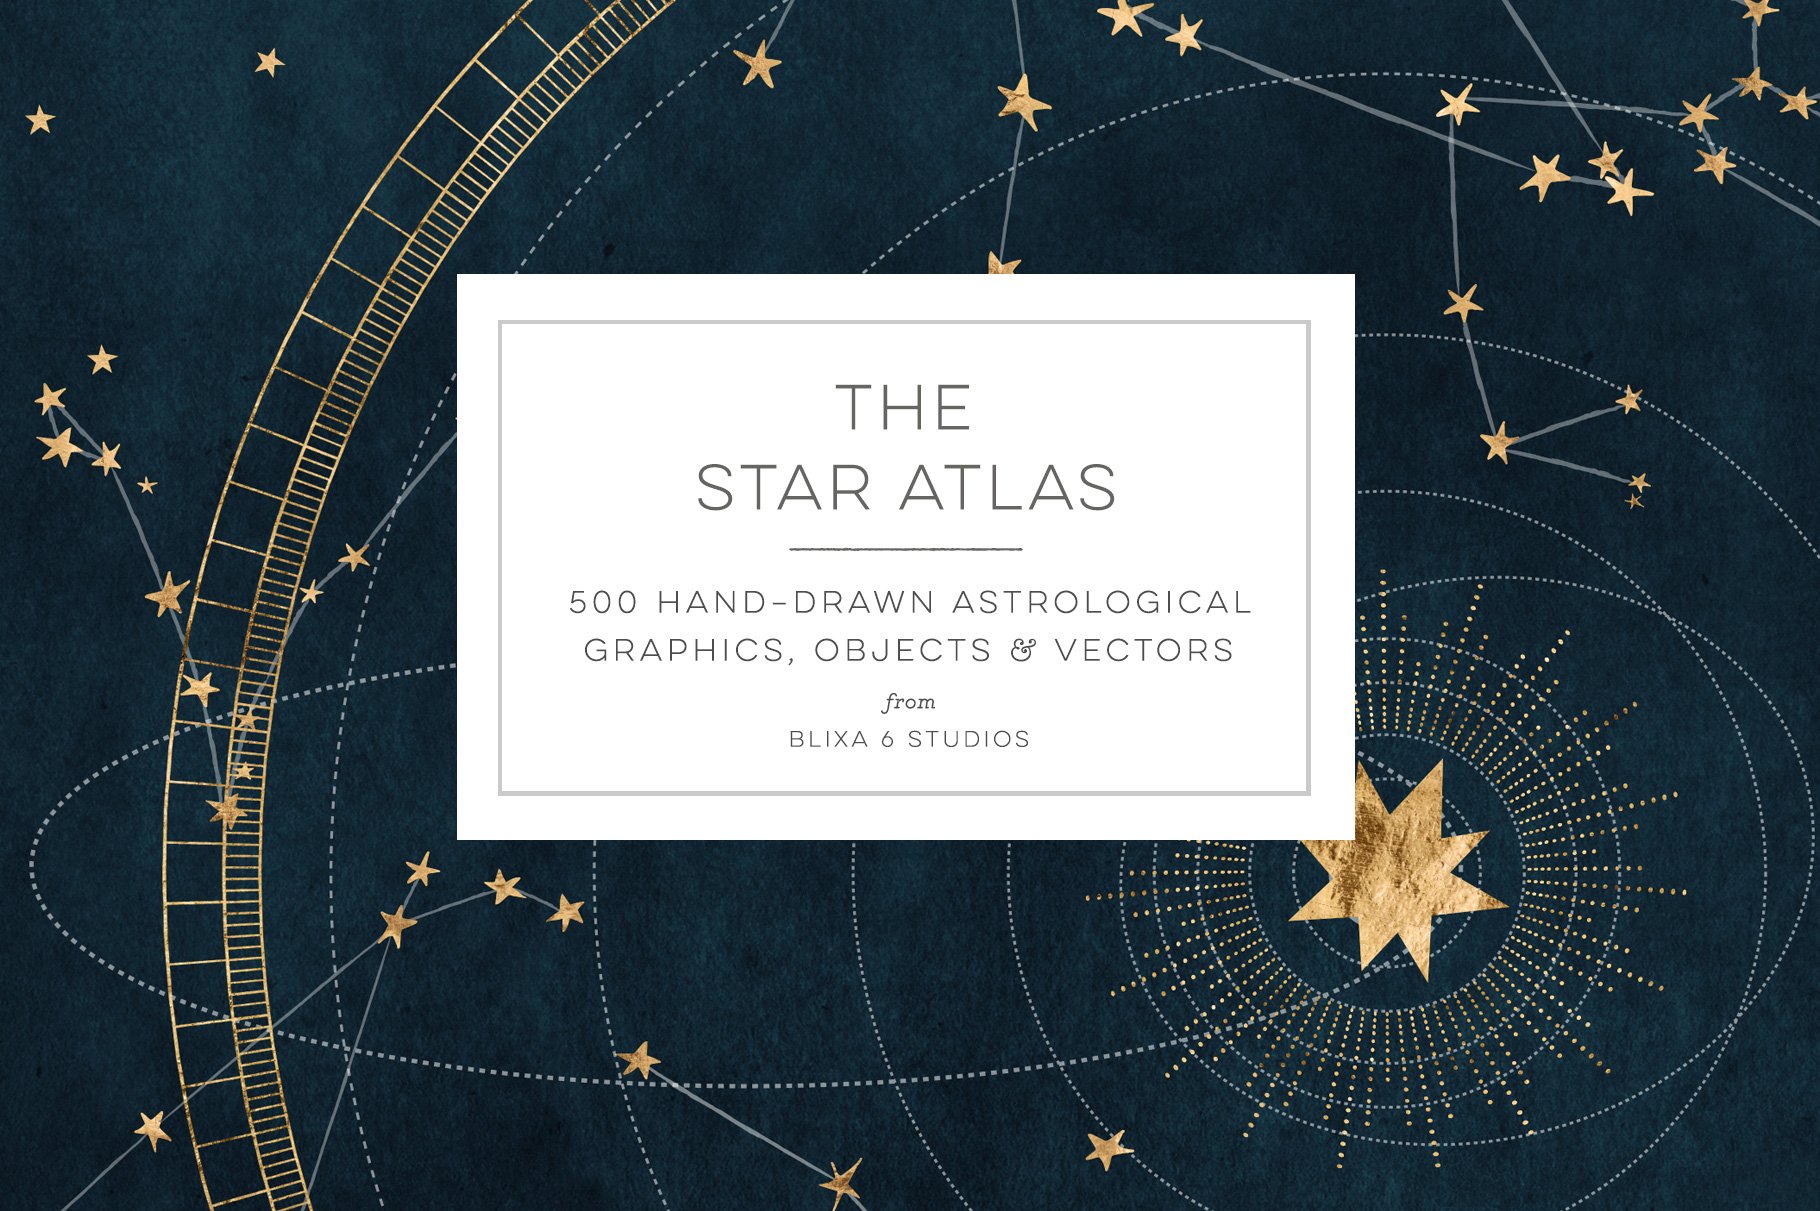 thestaratlas sample 01 280